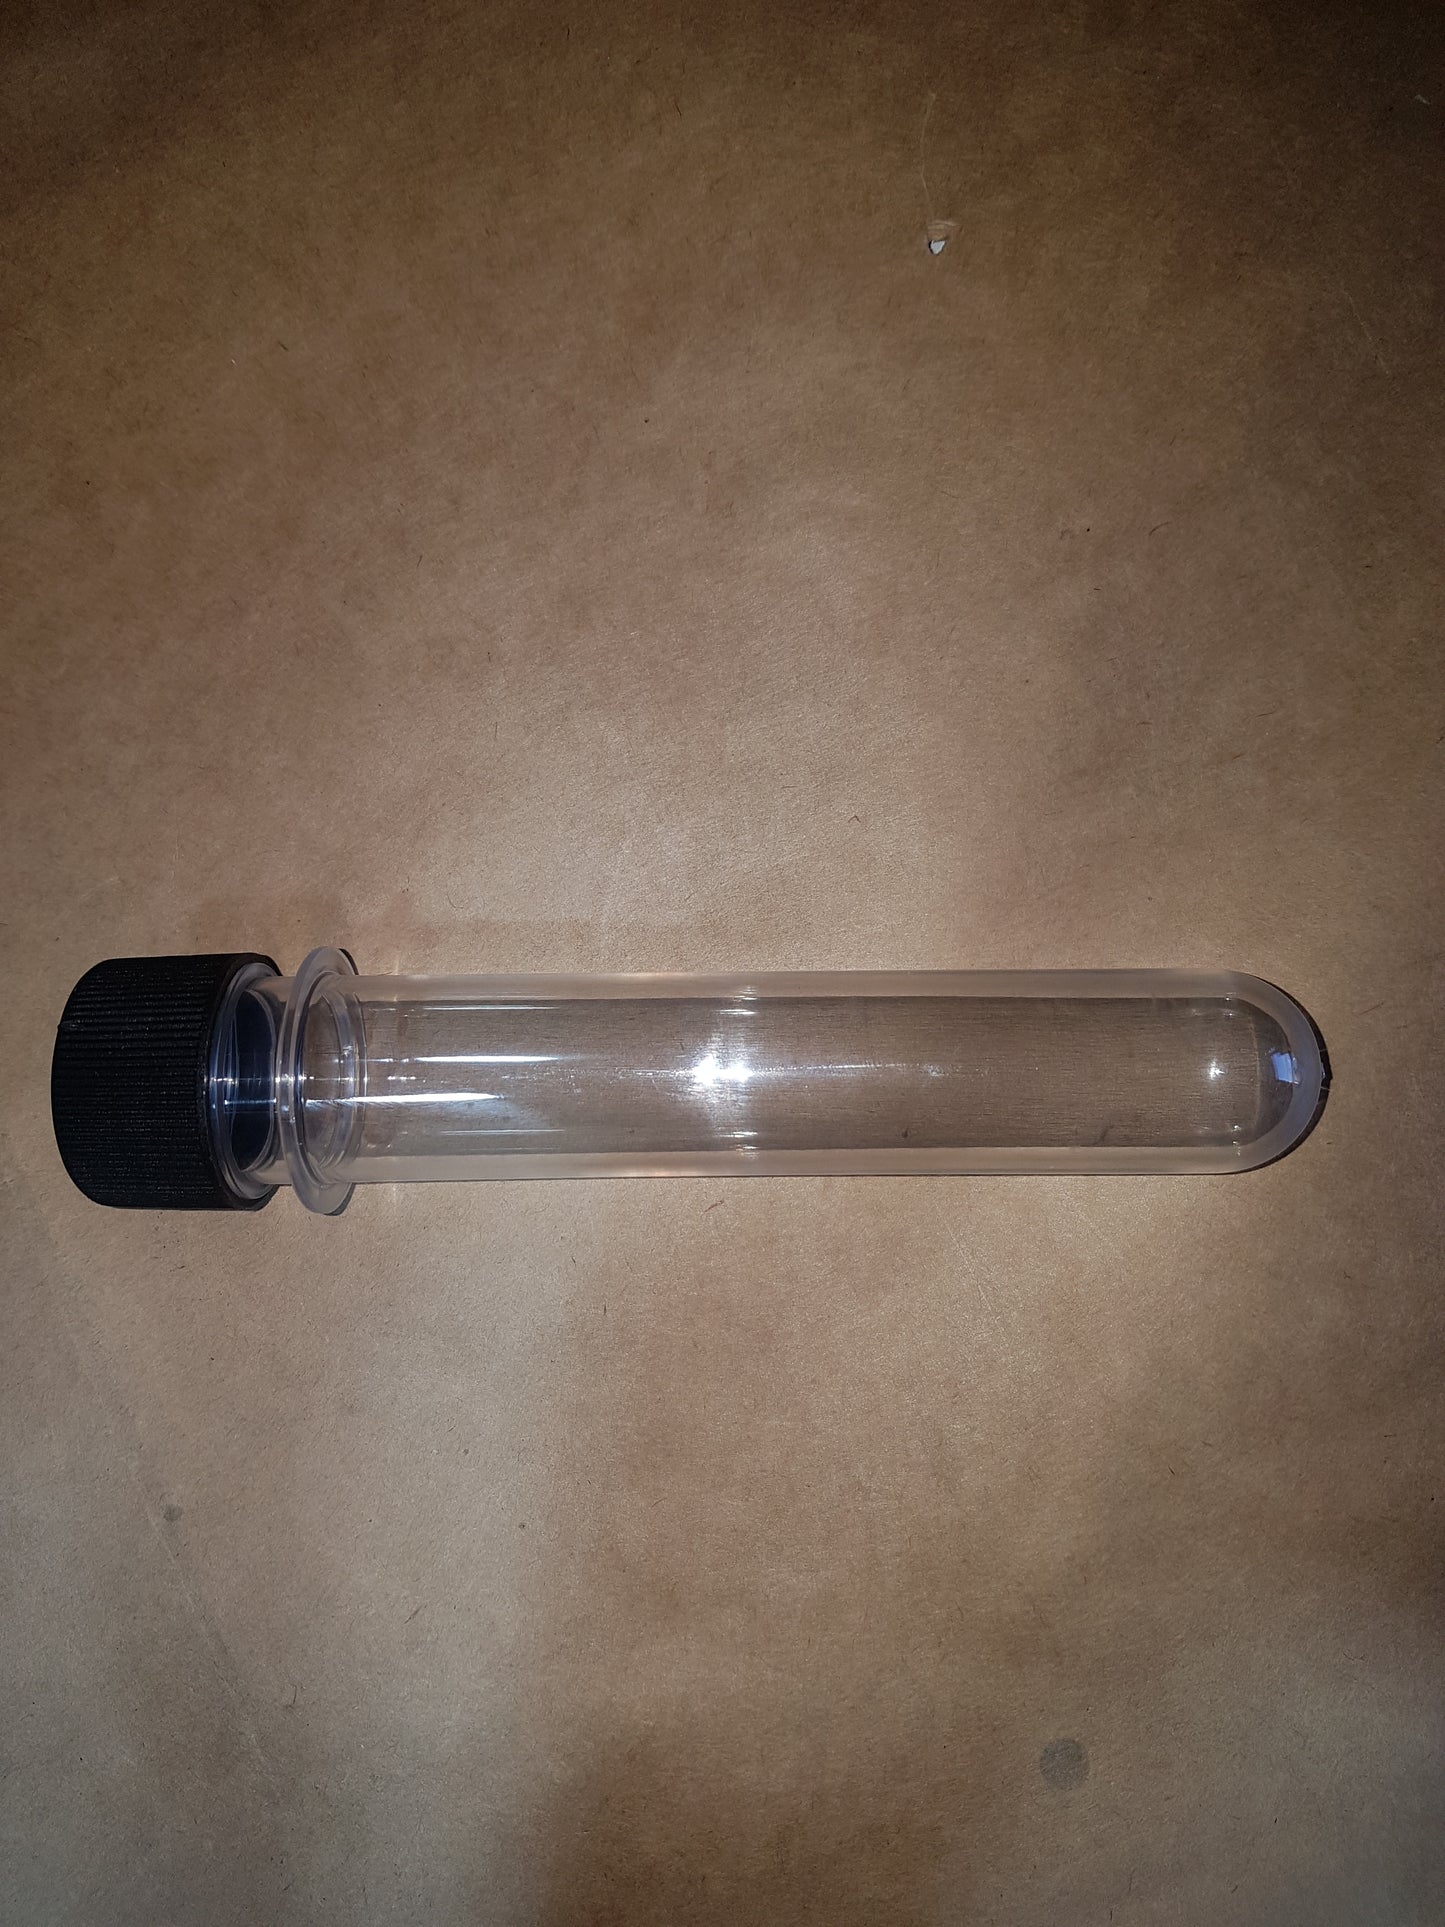 Plastic tube - test tube